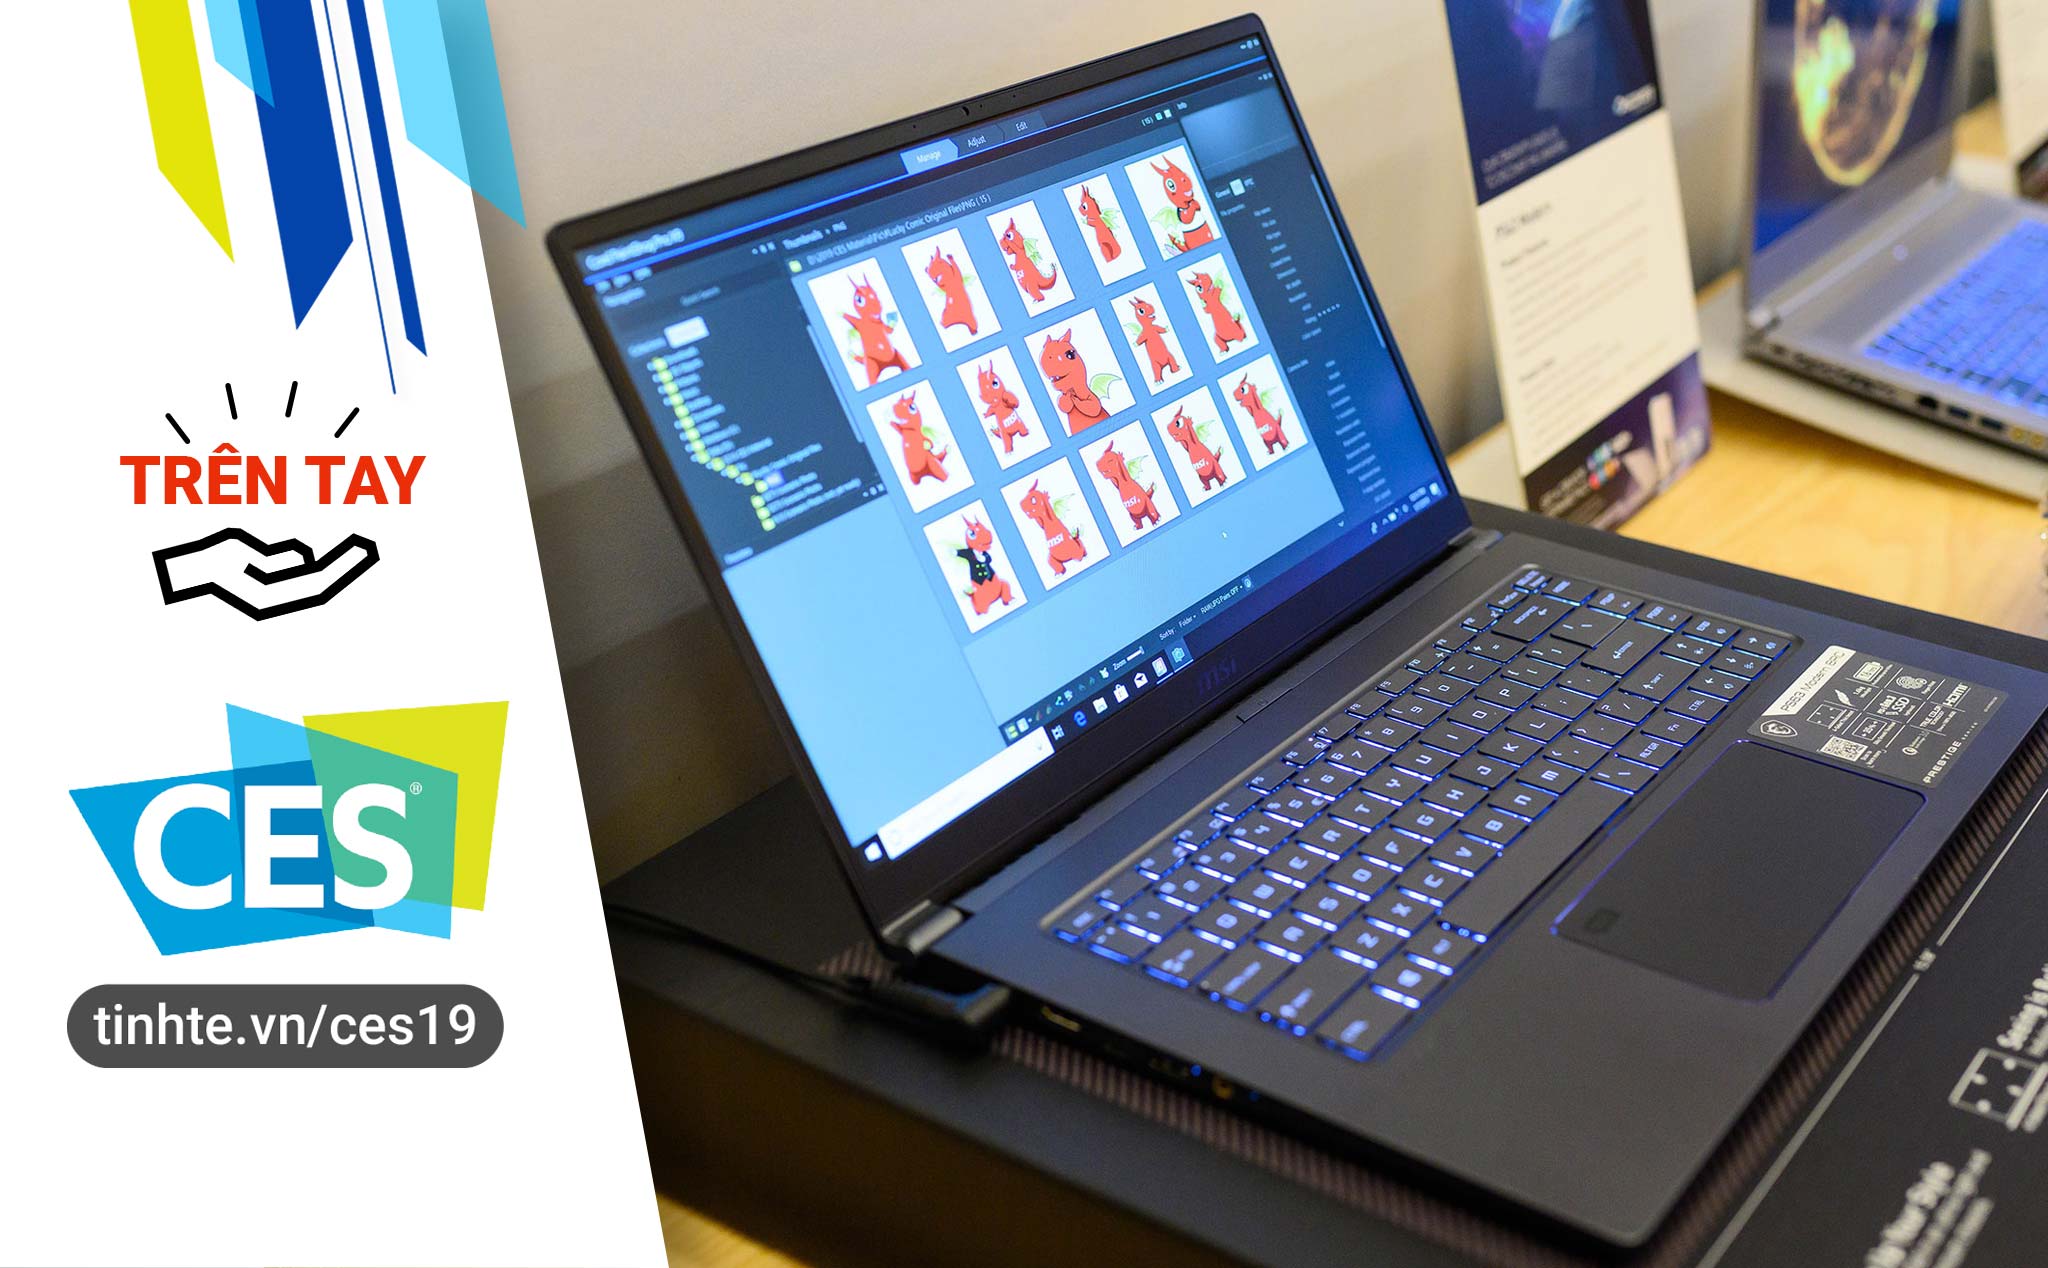 #CES19: Trên tay MSI Prestige PS63 Modern - laptop doanh nghiệp, hợp tác cùng Discovery Channel